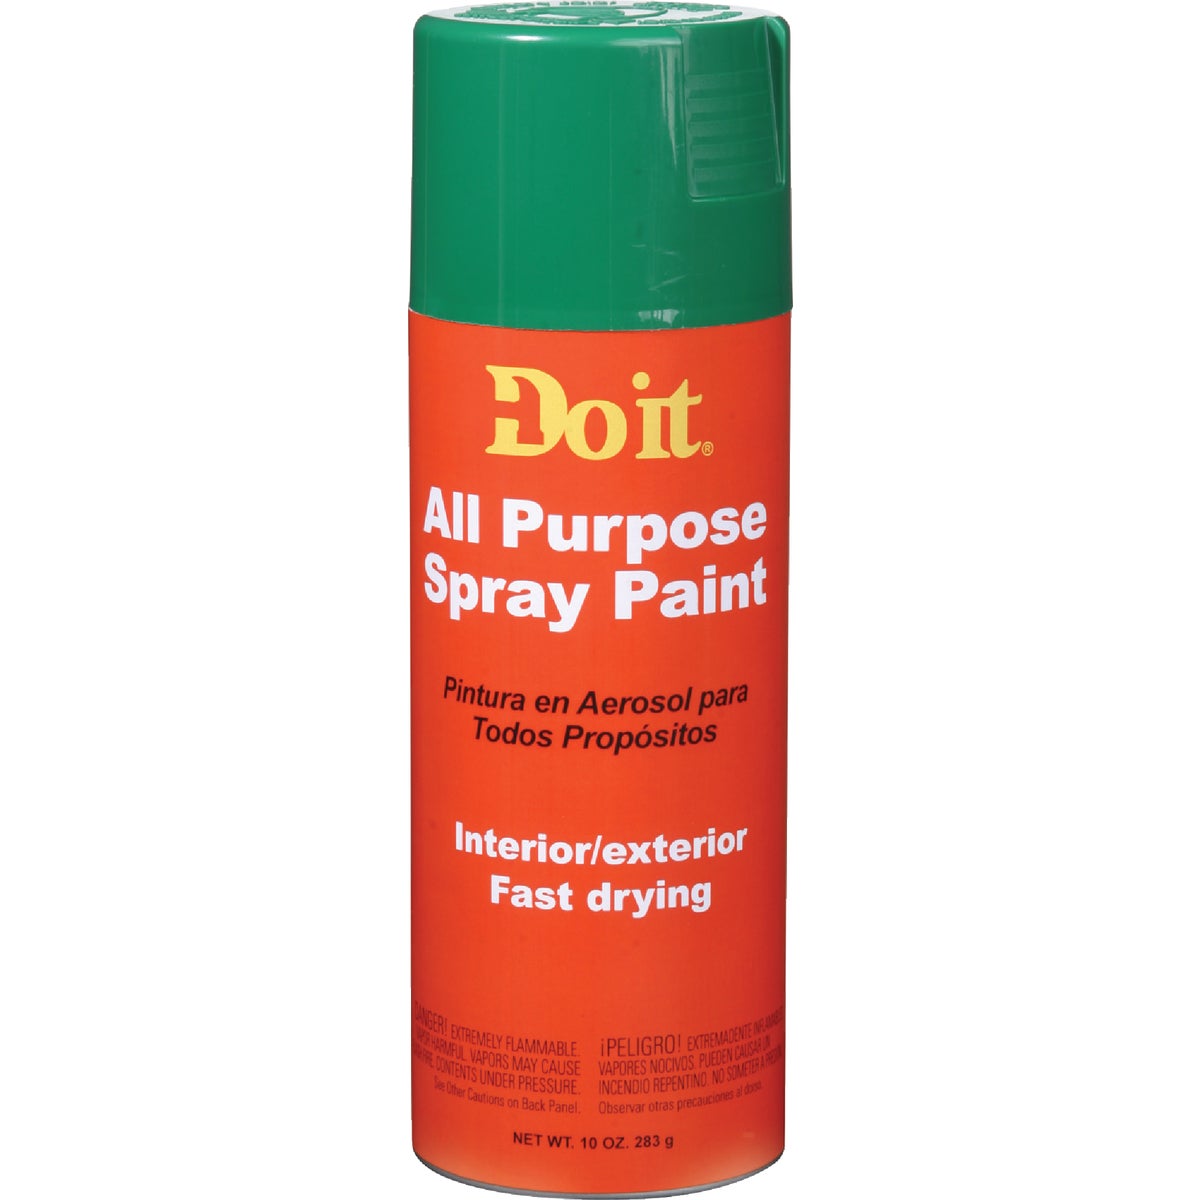 Do it 10 Oz. Gloss All Purpose Spray Paint, Green